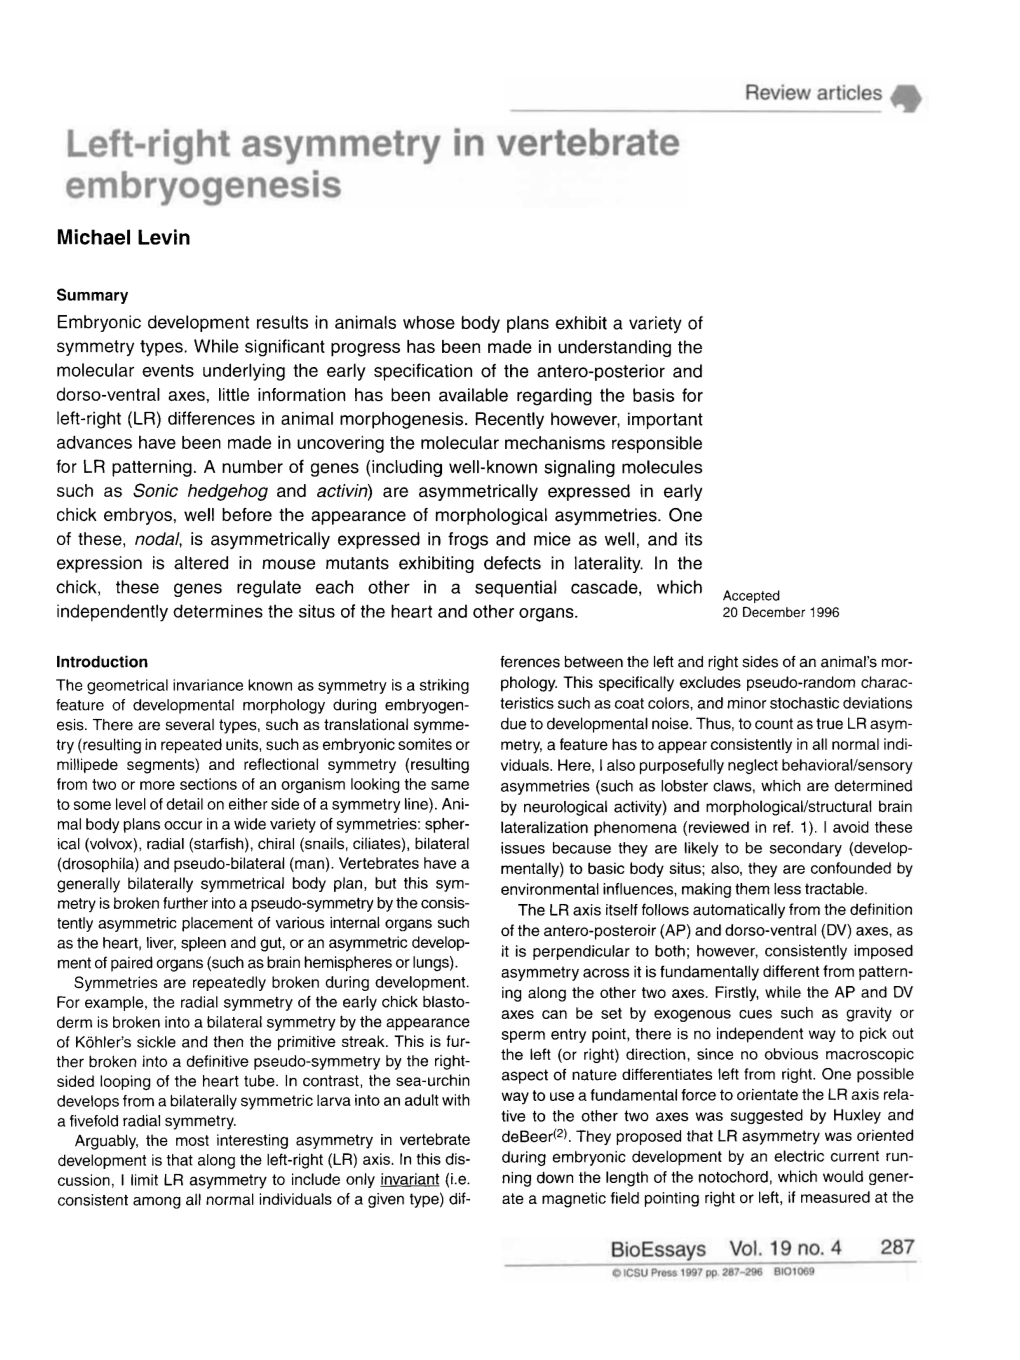 Left-Right Asymmetry in Vertebrate Embryogenesis